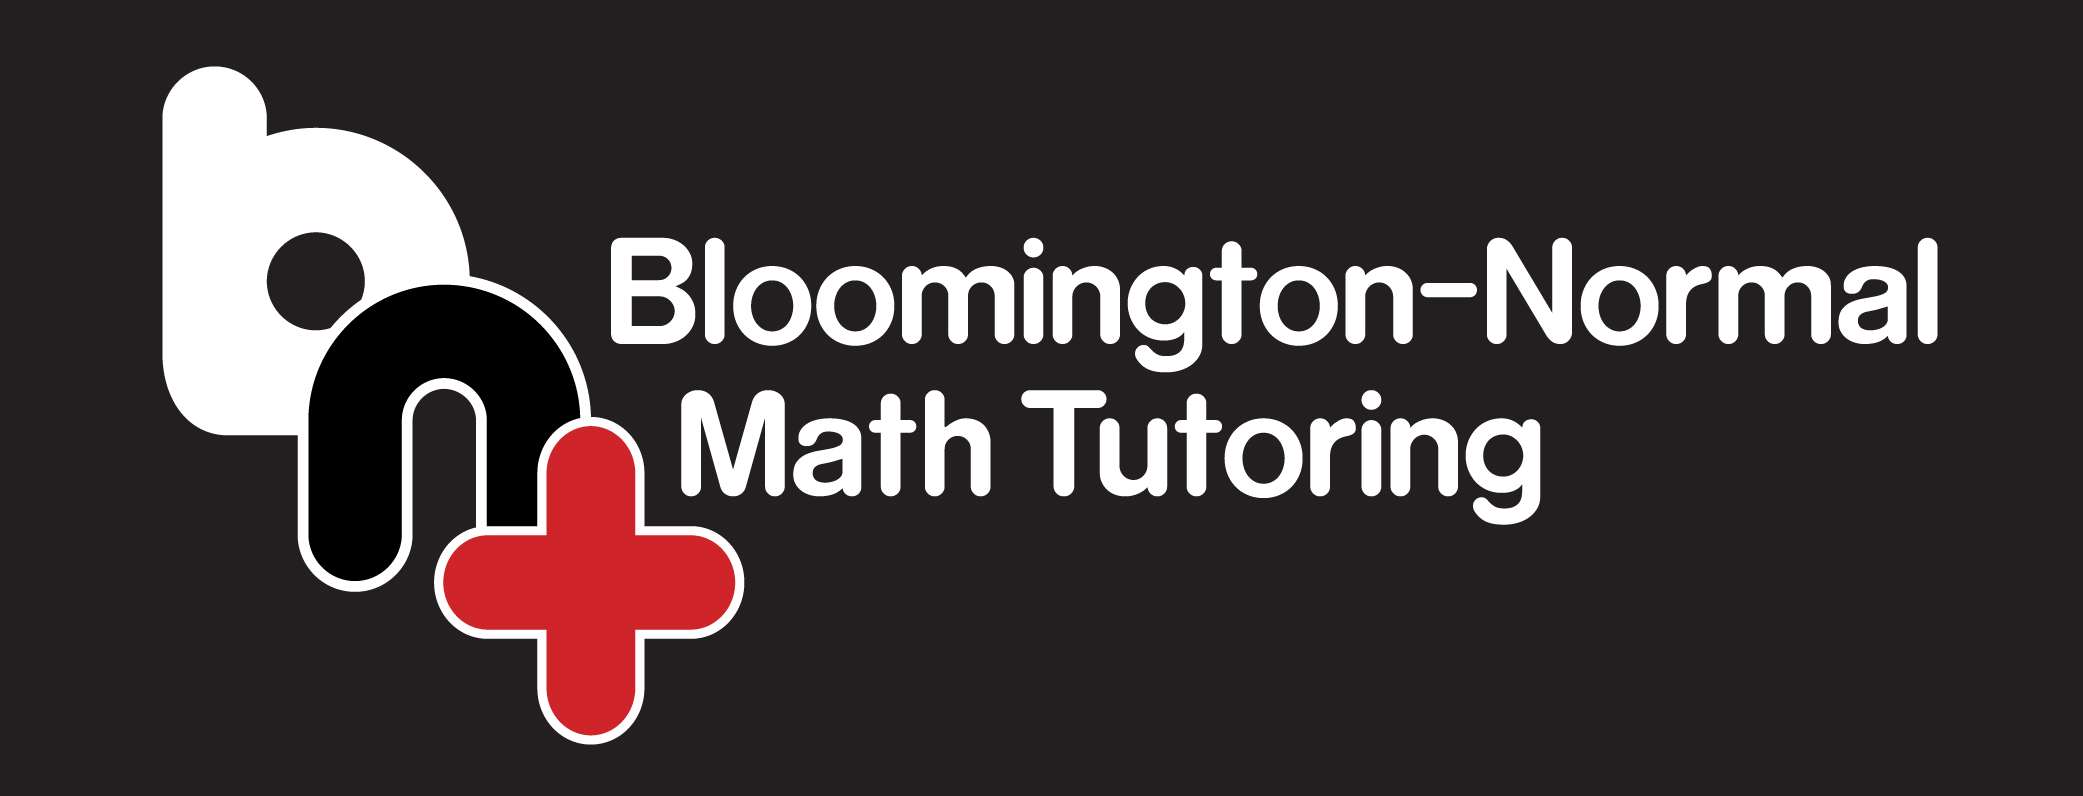 Bloomington-Normal Math Tutoring